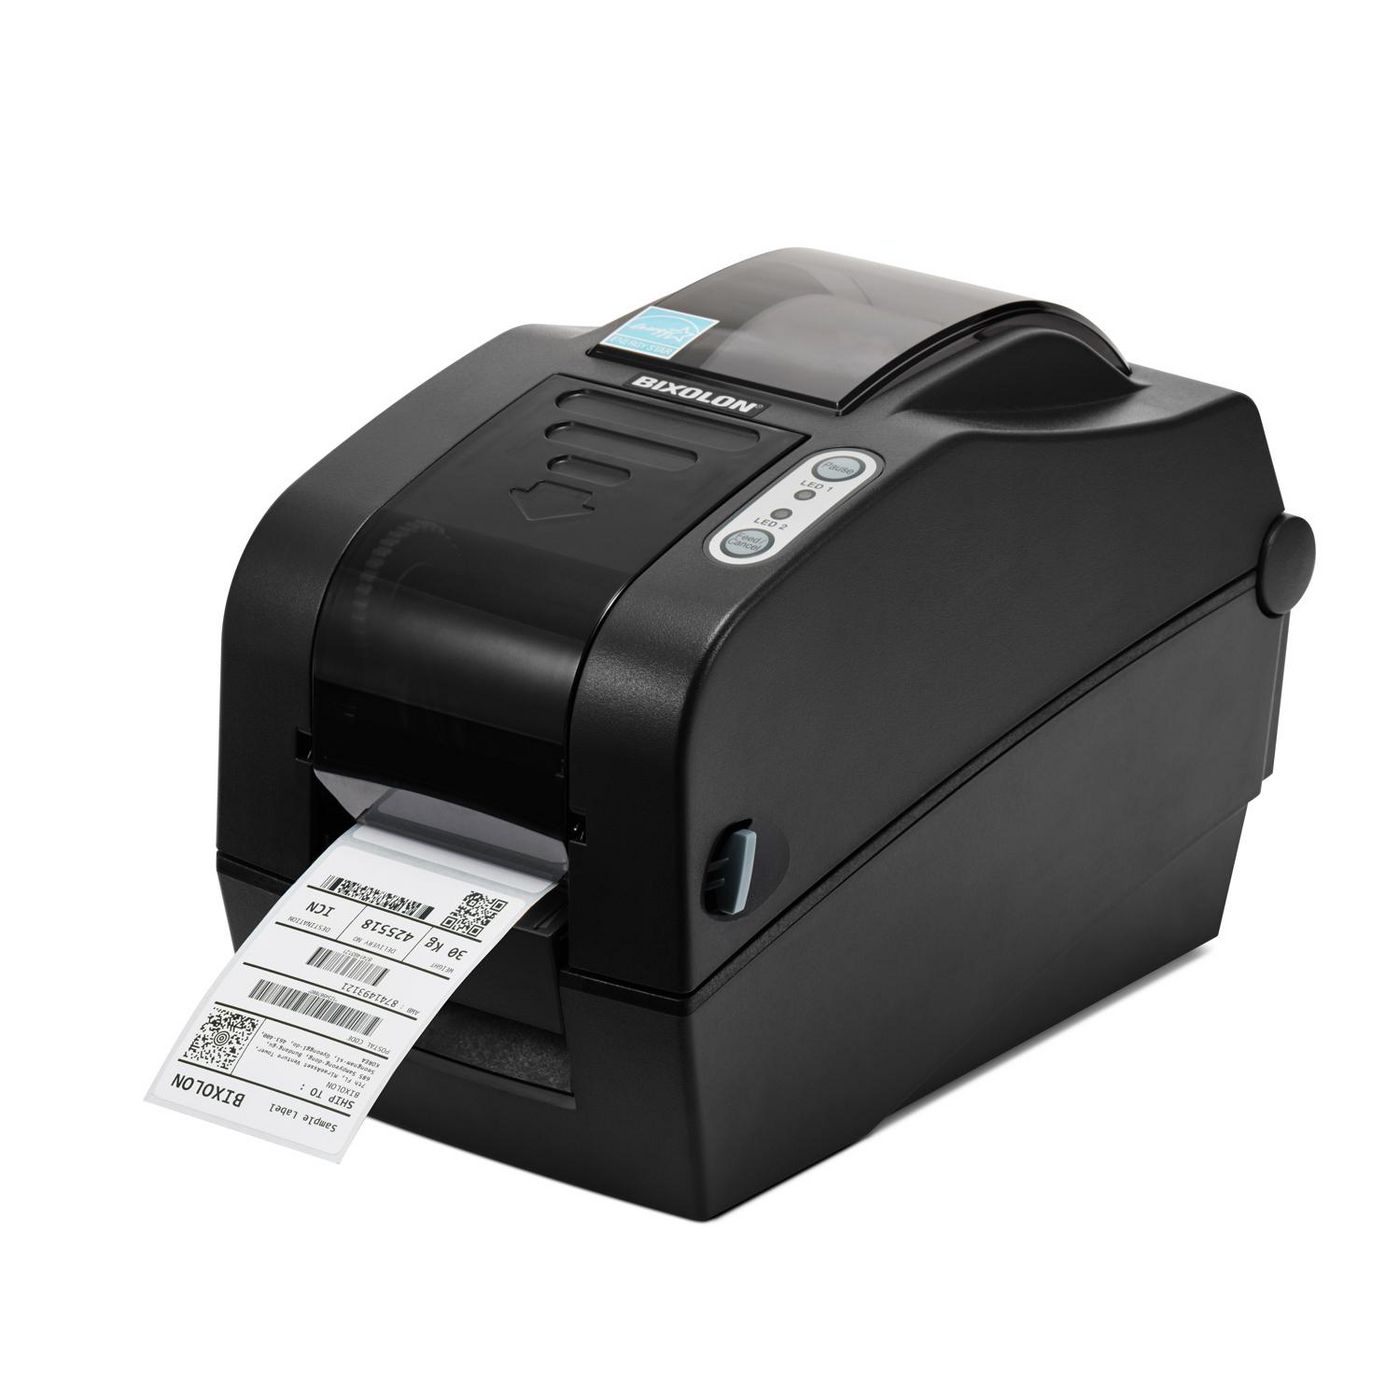 Slp-tx220eg -  Label Printer - Direct Thermal - USB / Parallel / Ethernet